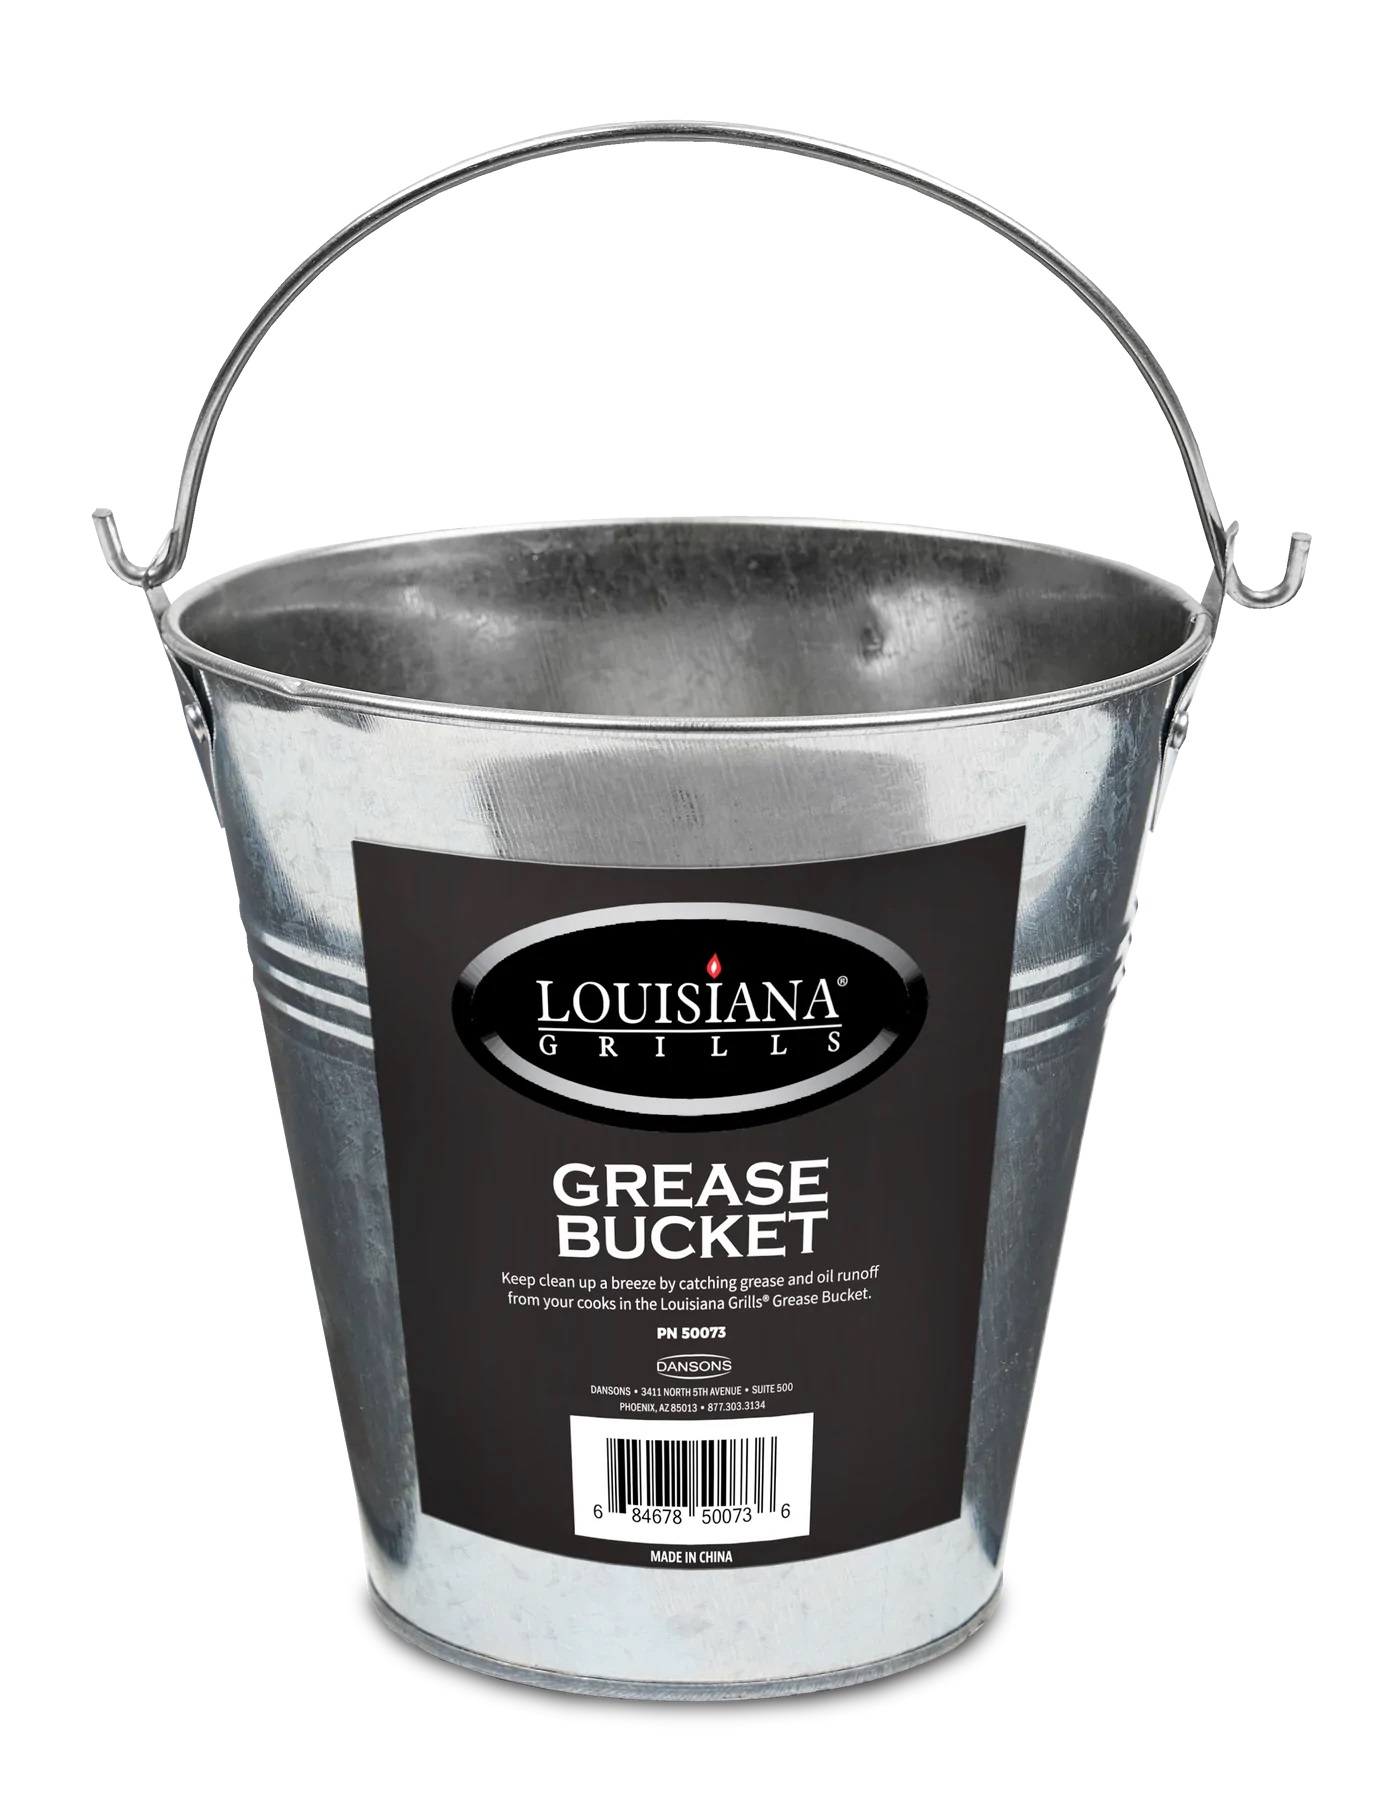 louisiana grills steel grease bucket product image